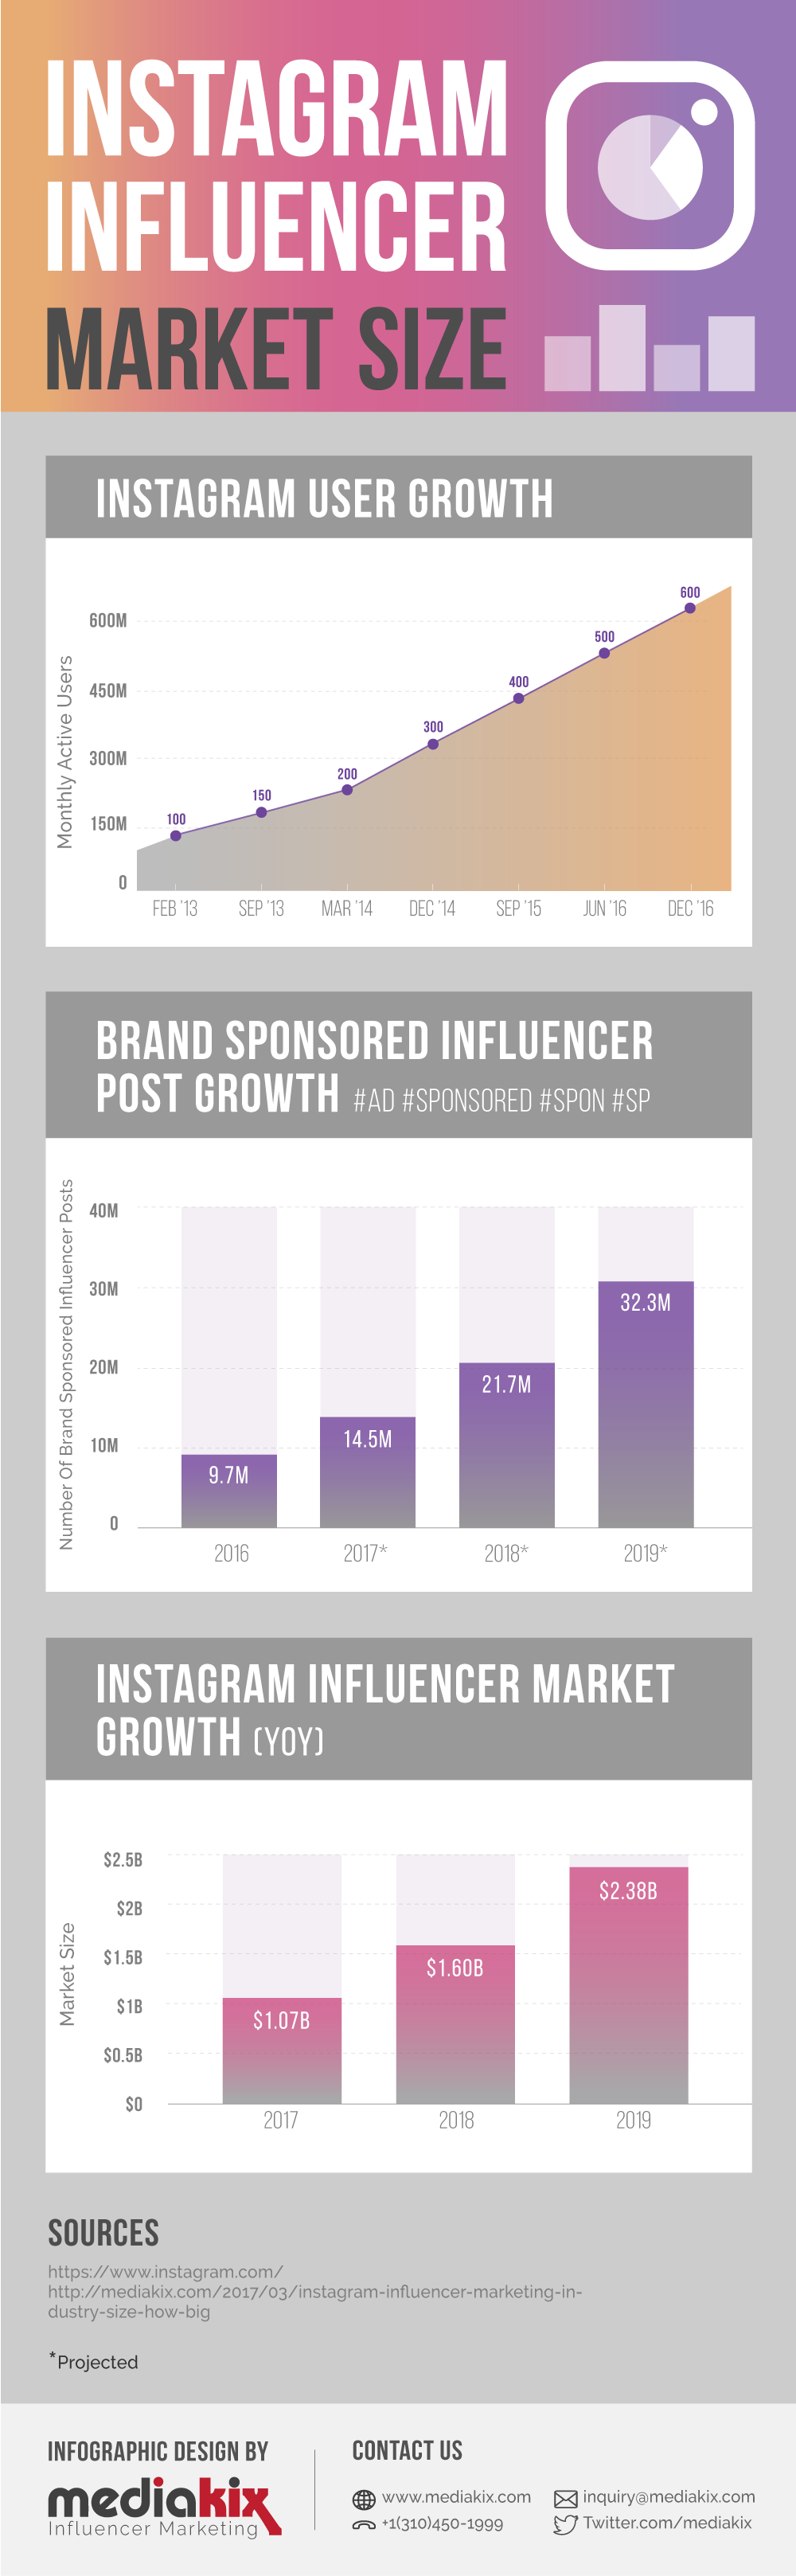 instagram-influencer-marketing-infographic-industry-market-size.png